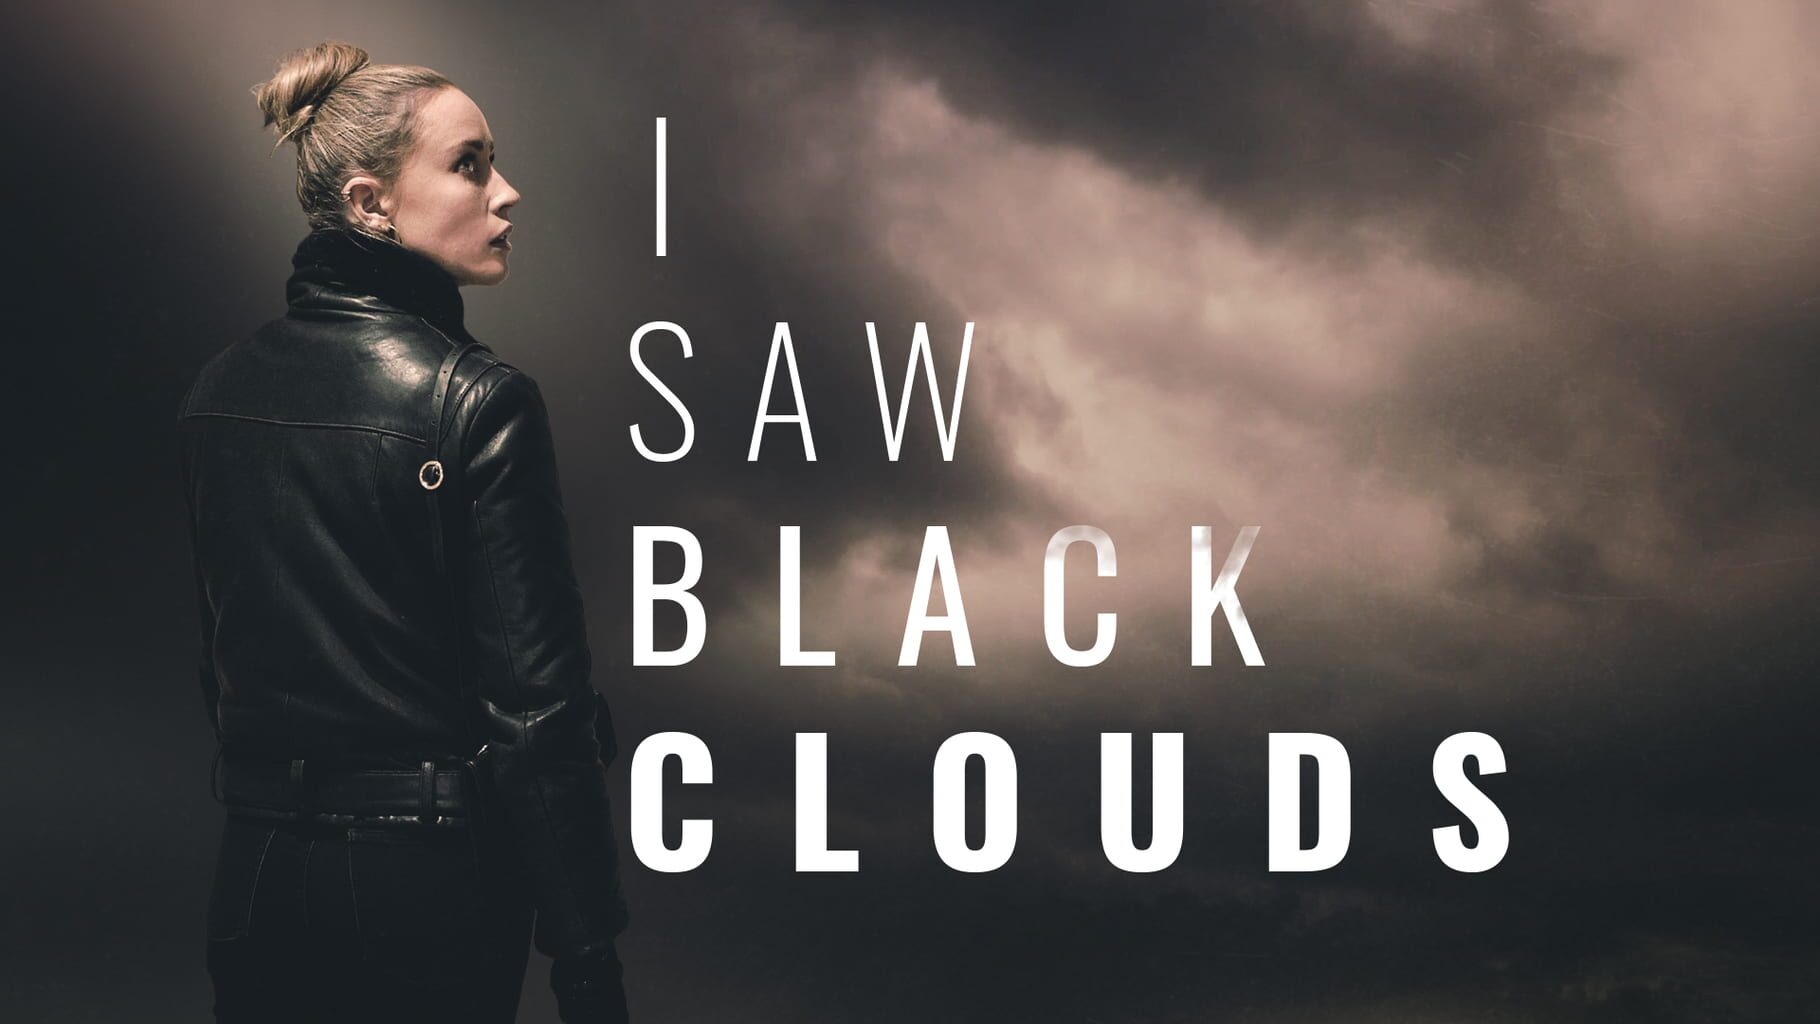 I Saw Black Clouds artwork